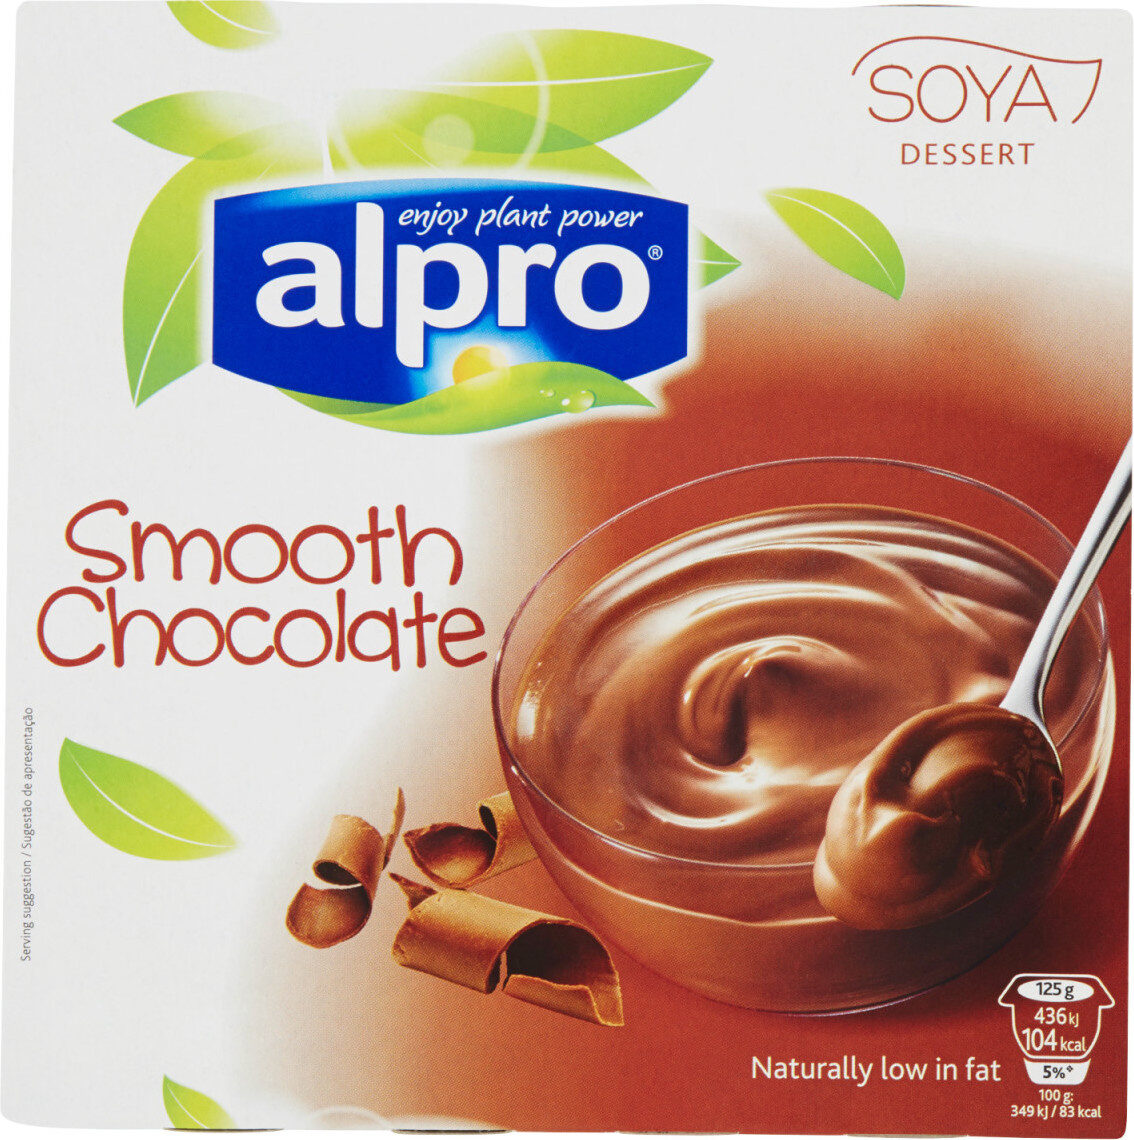 Soya dessert smooth chocolate - Product - fr